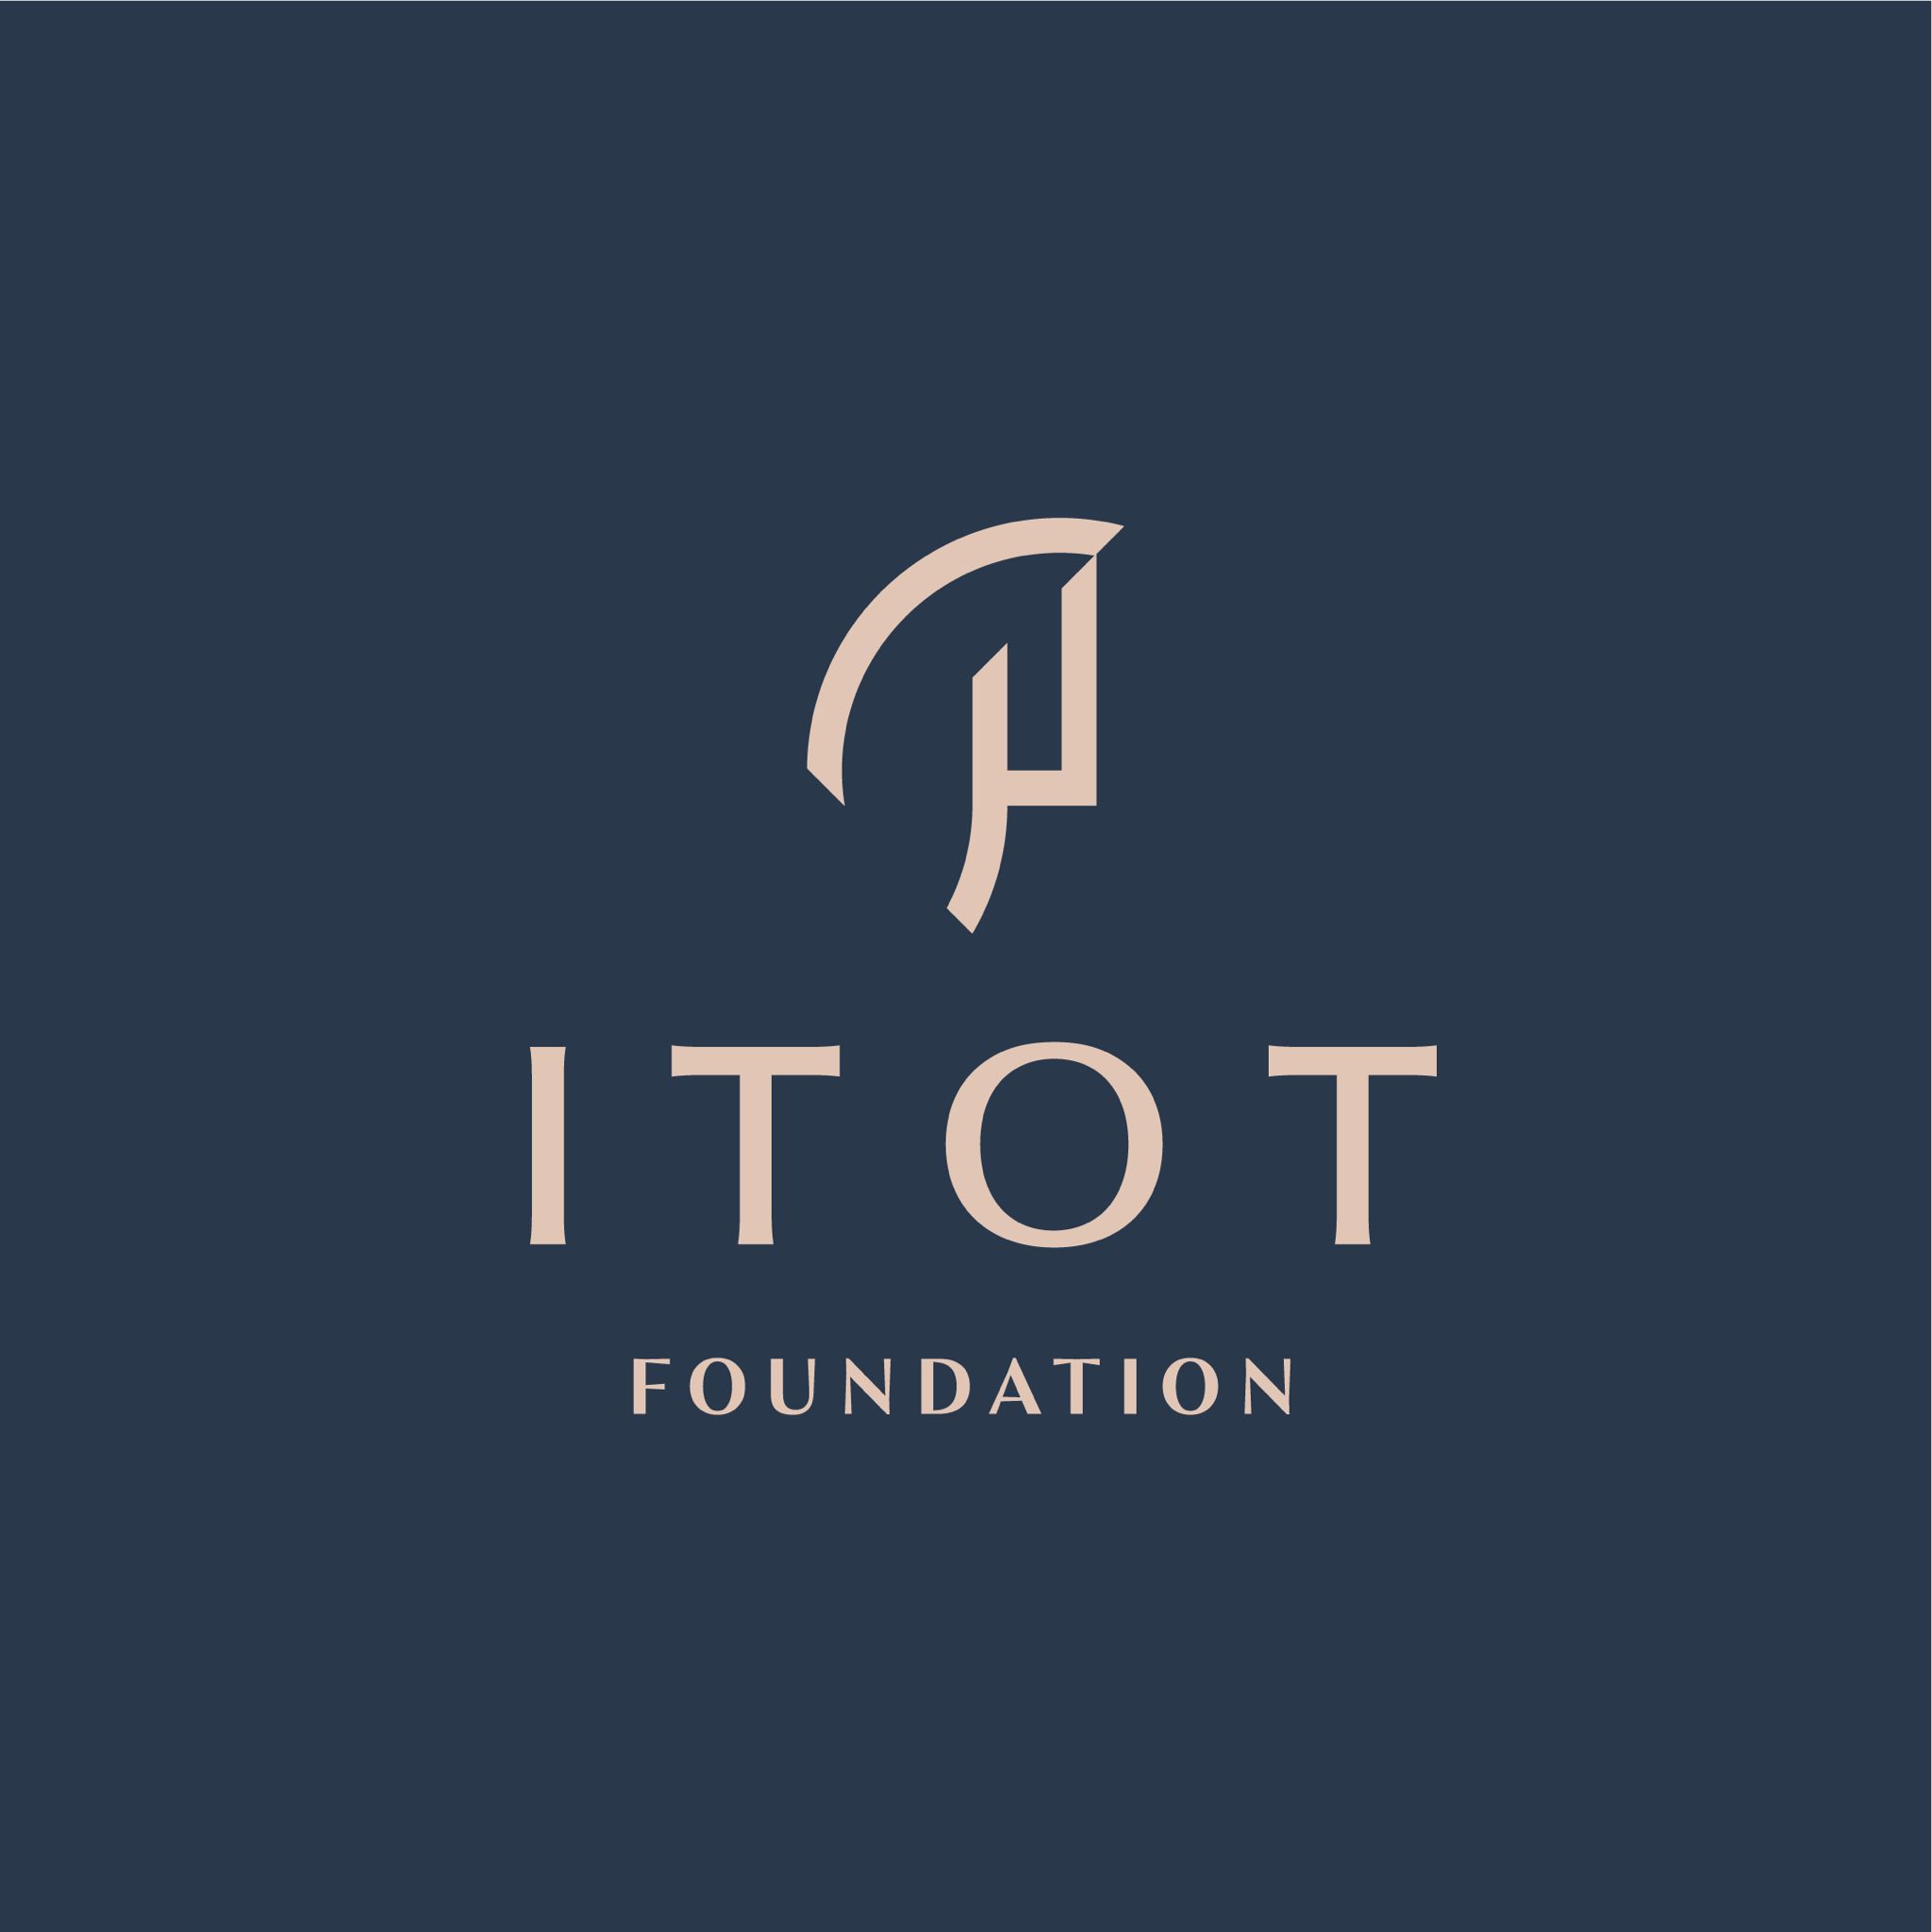 ITOT Foundation logo